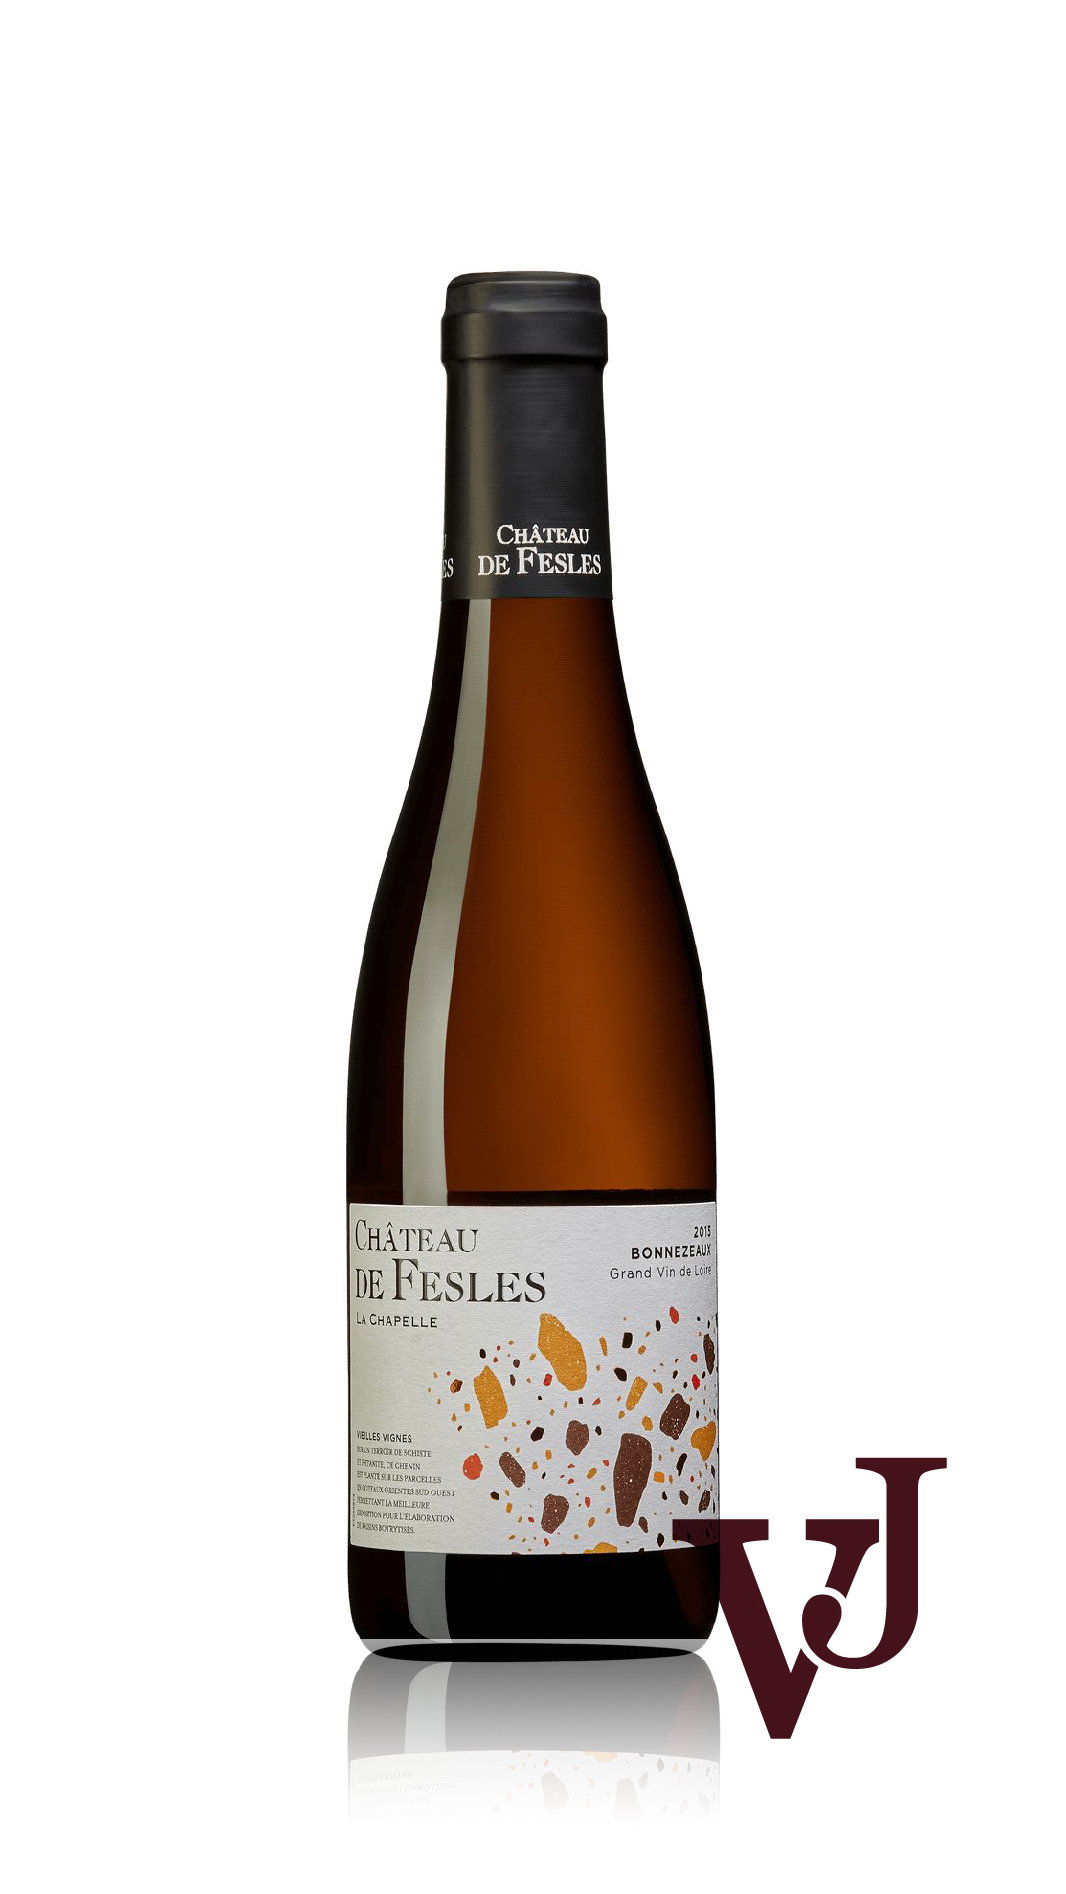 Övrigt vin - Château de Fesles Bonnezeaux artikel nummer 9420702 från producenten Château de Fesles från området Frankrike